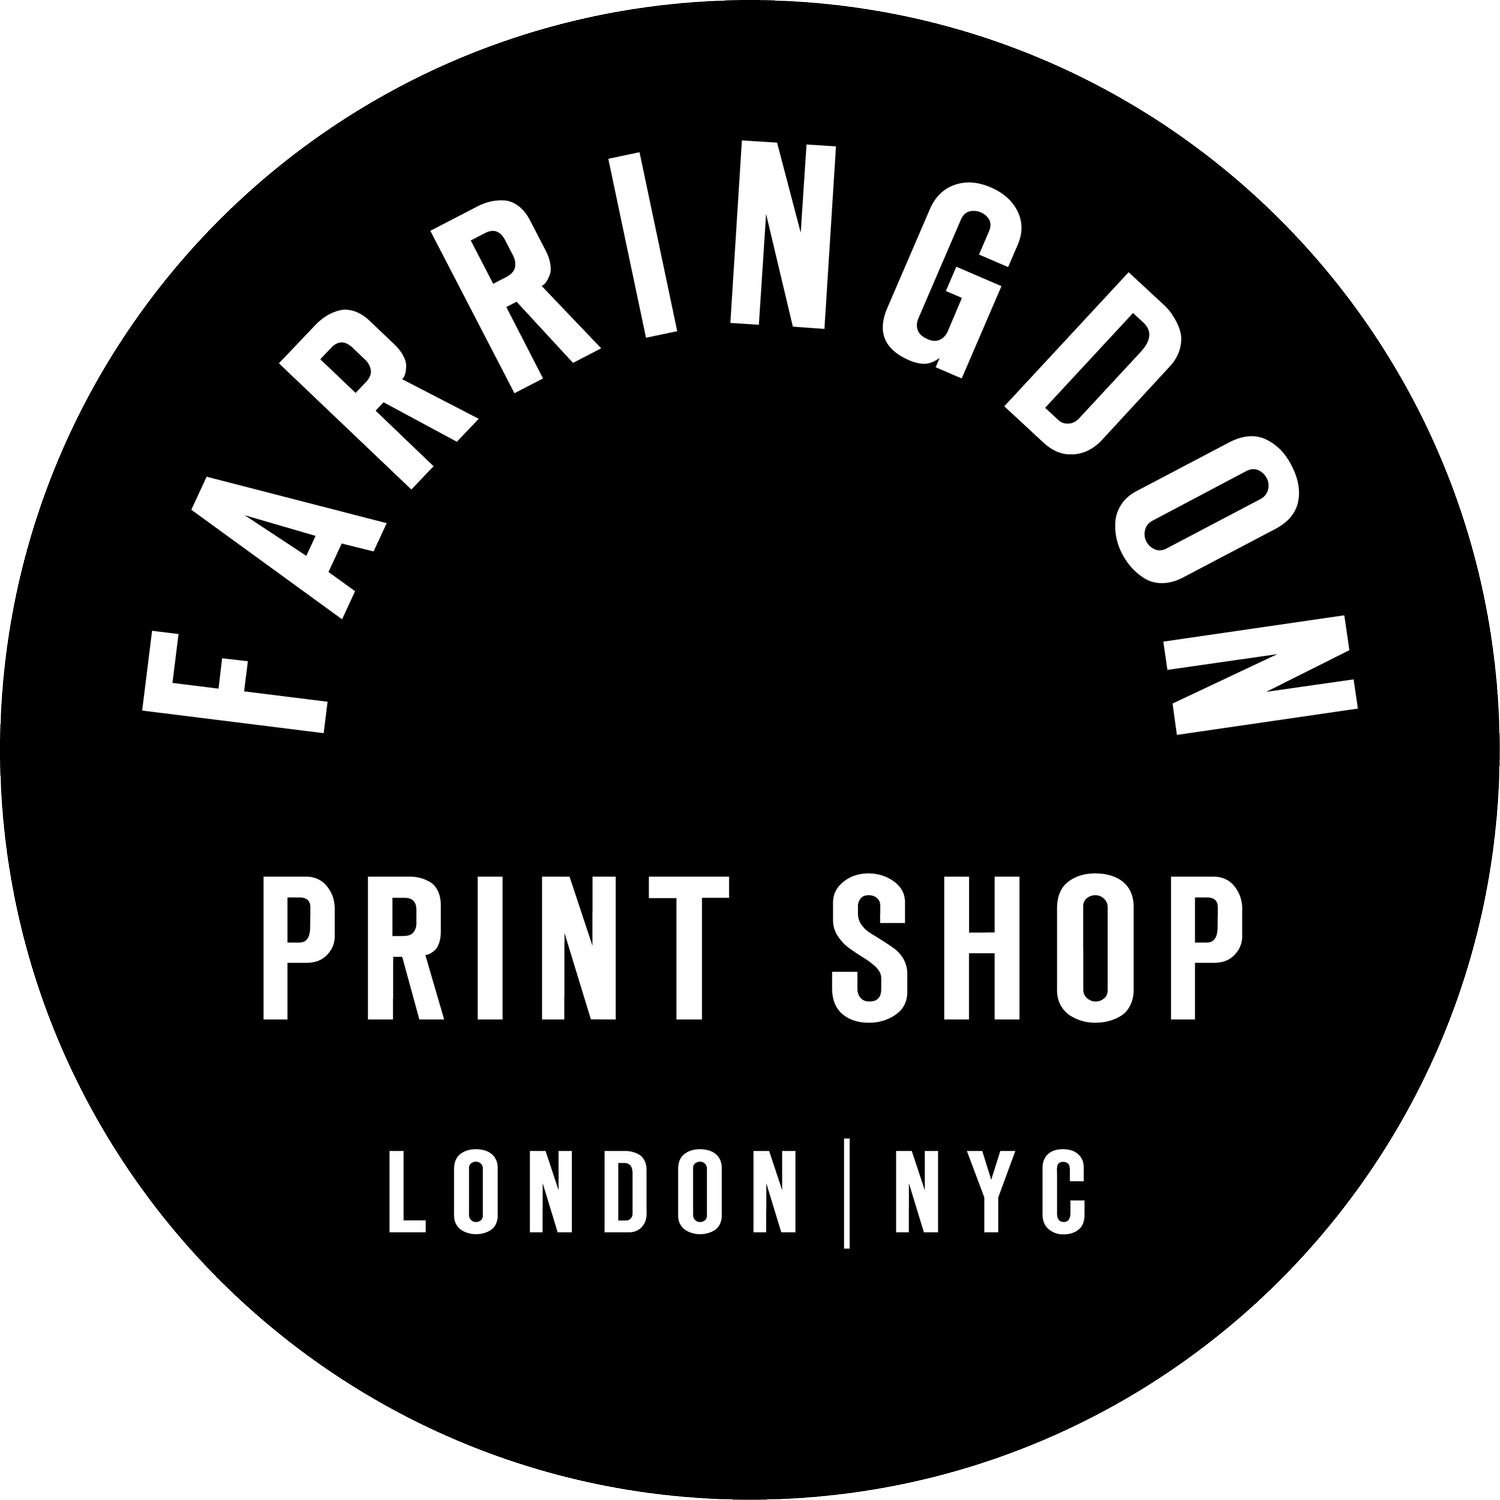 Farringdon Print Shop